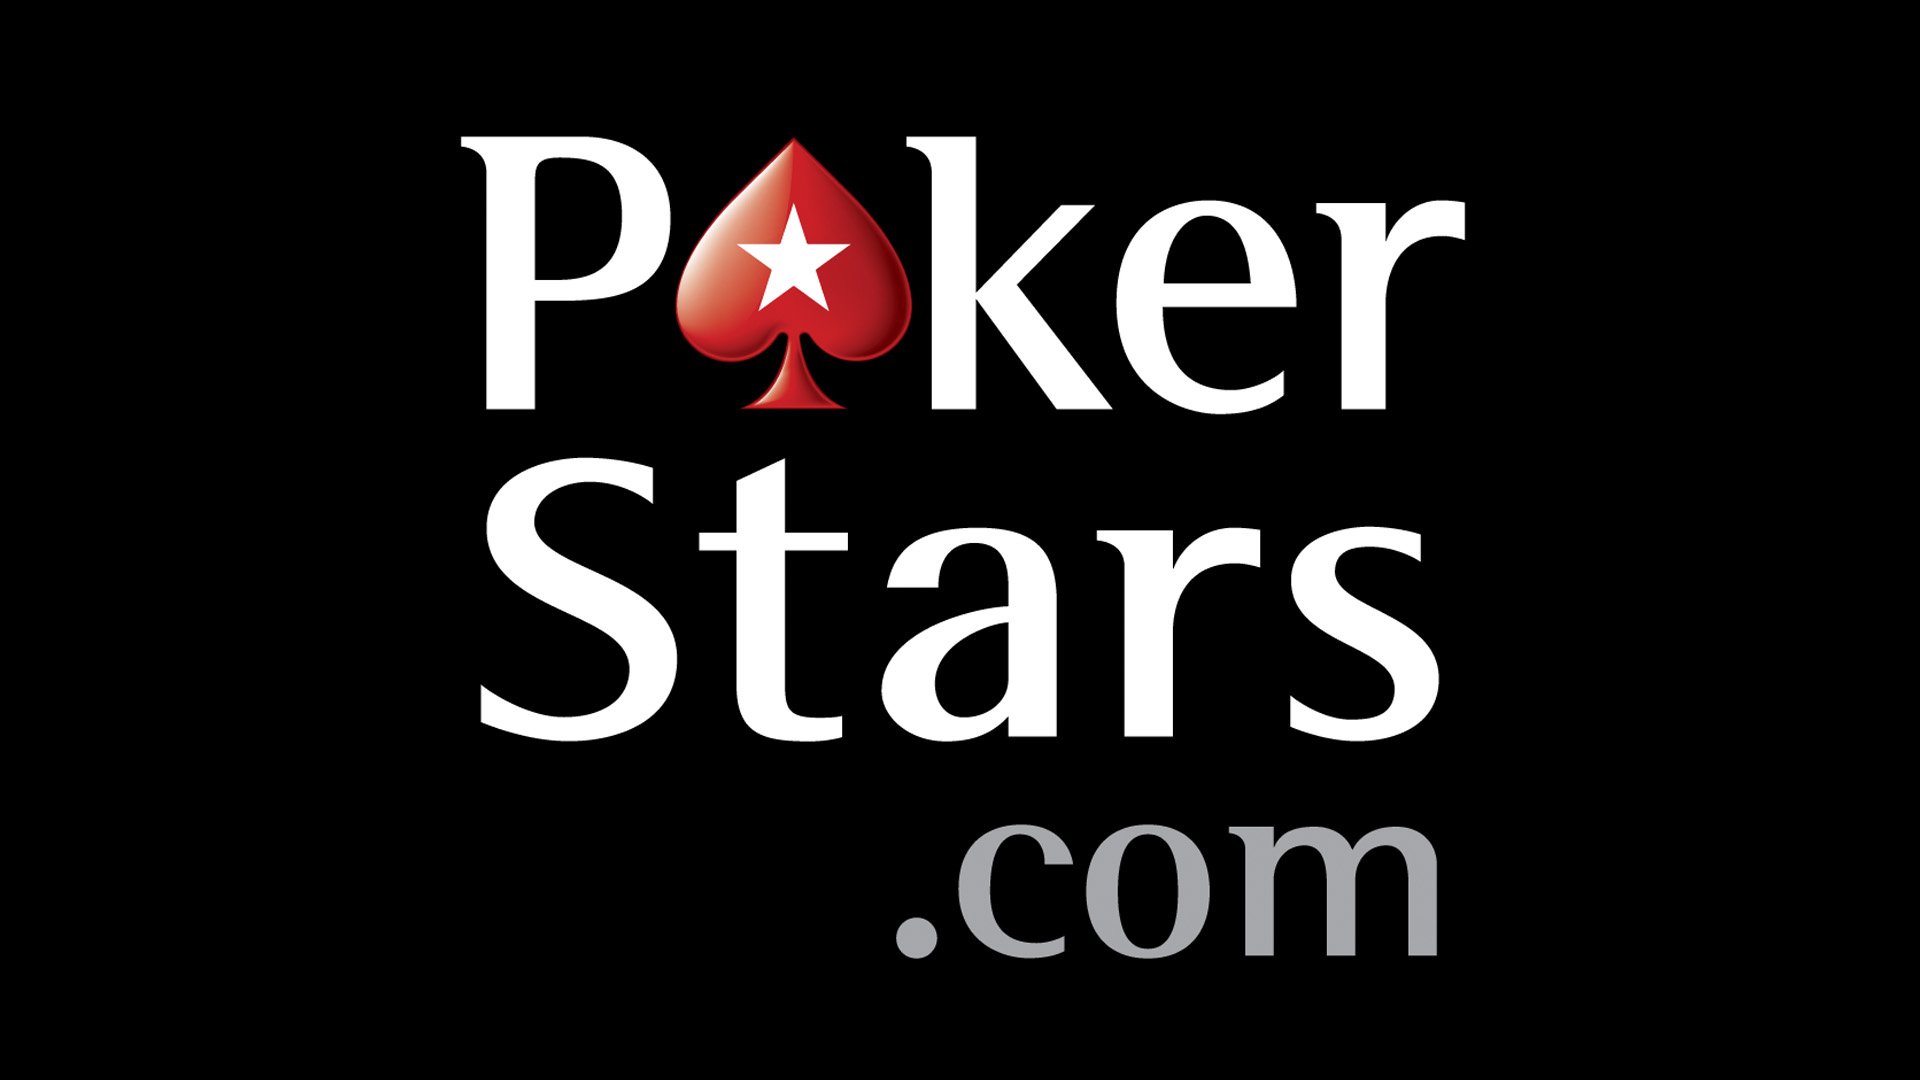 Poker stars com. Покер старс. Покерстарс казино лого. Картинки pokerstars. Покерная заставка.